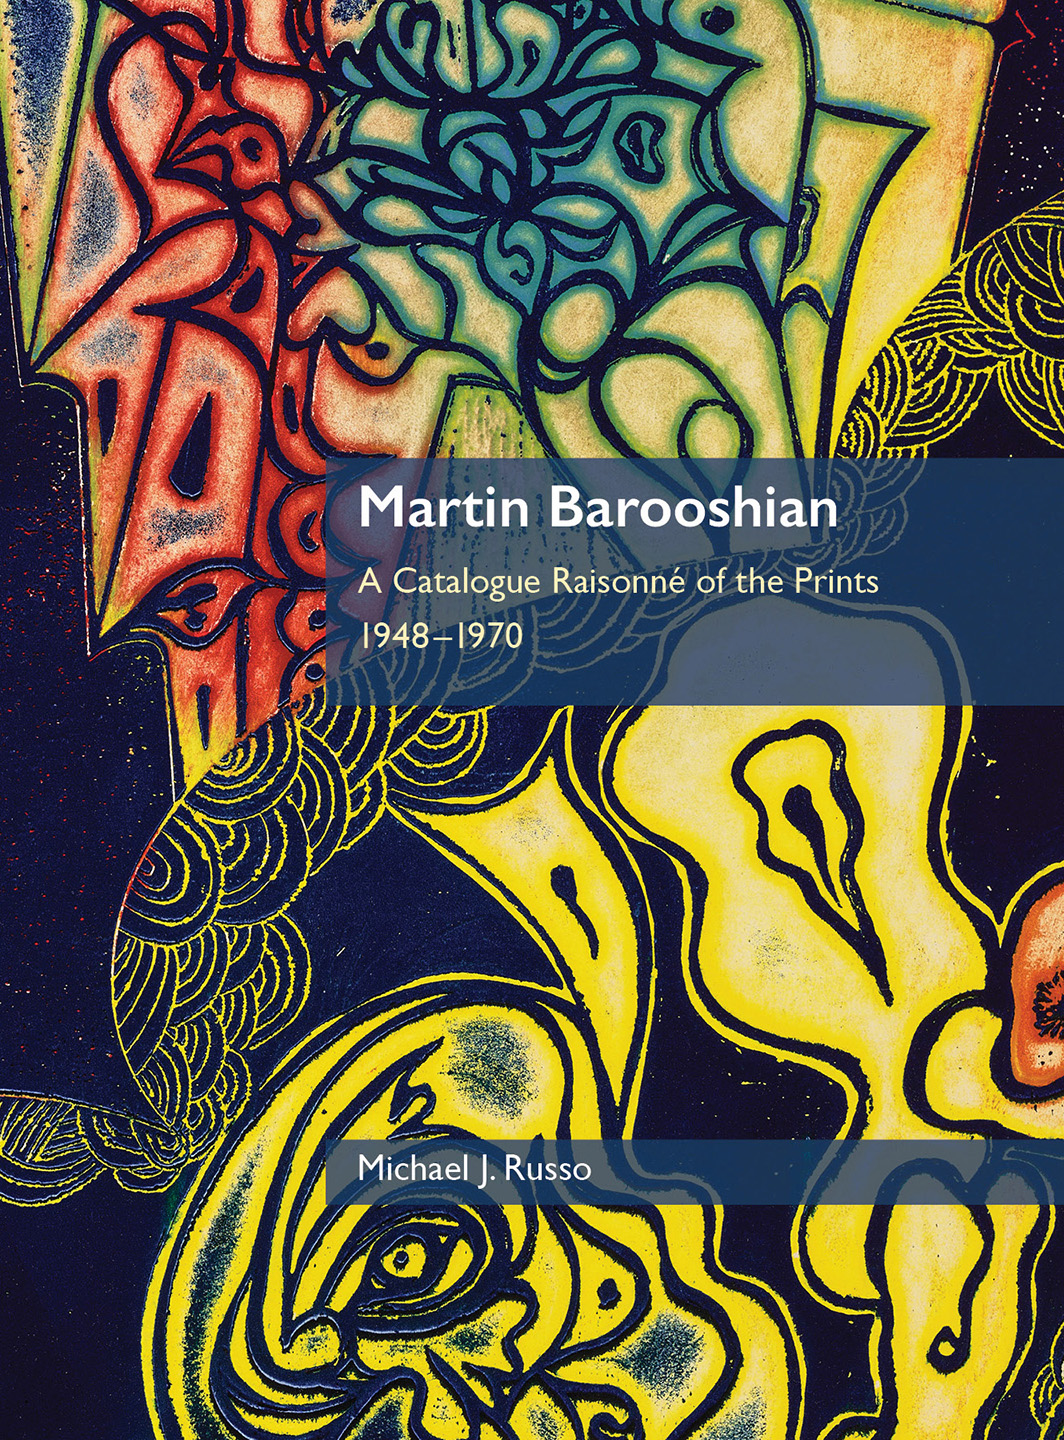  Fine art monograph: Martin Barooshian